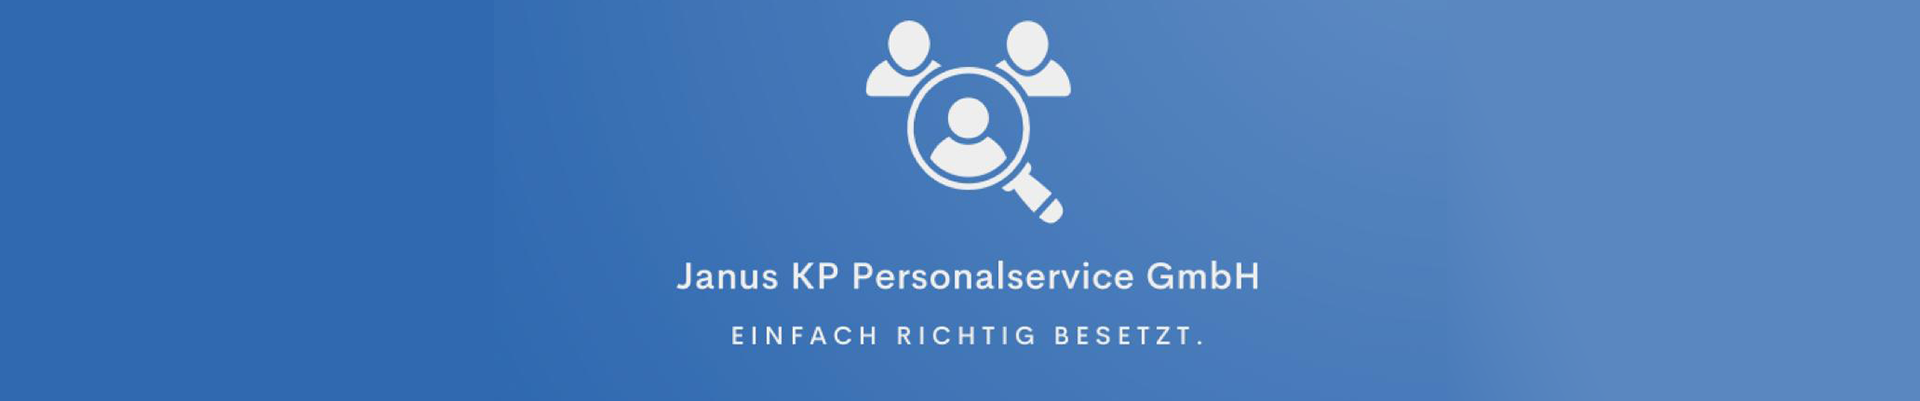 Janus KP Personalservice GmbH